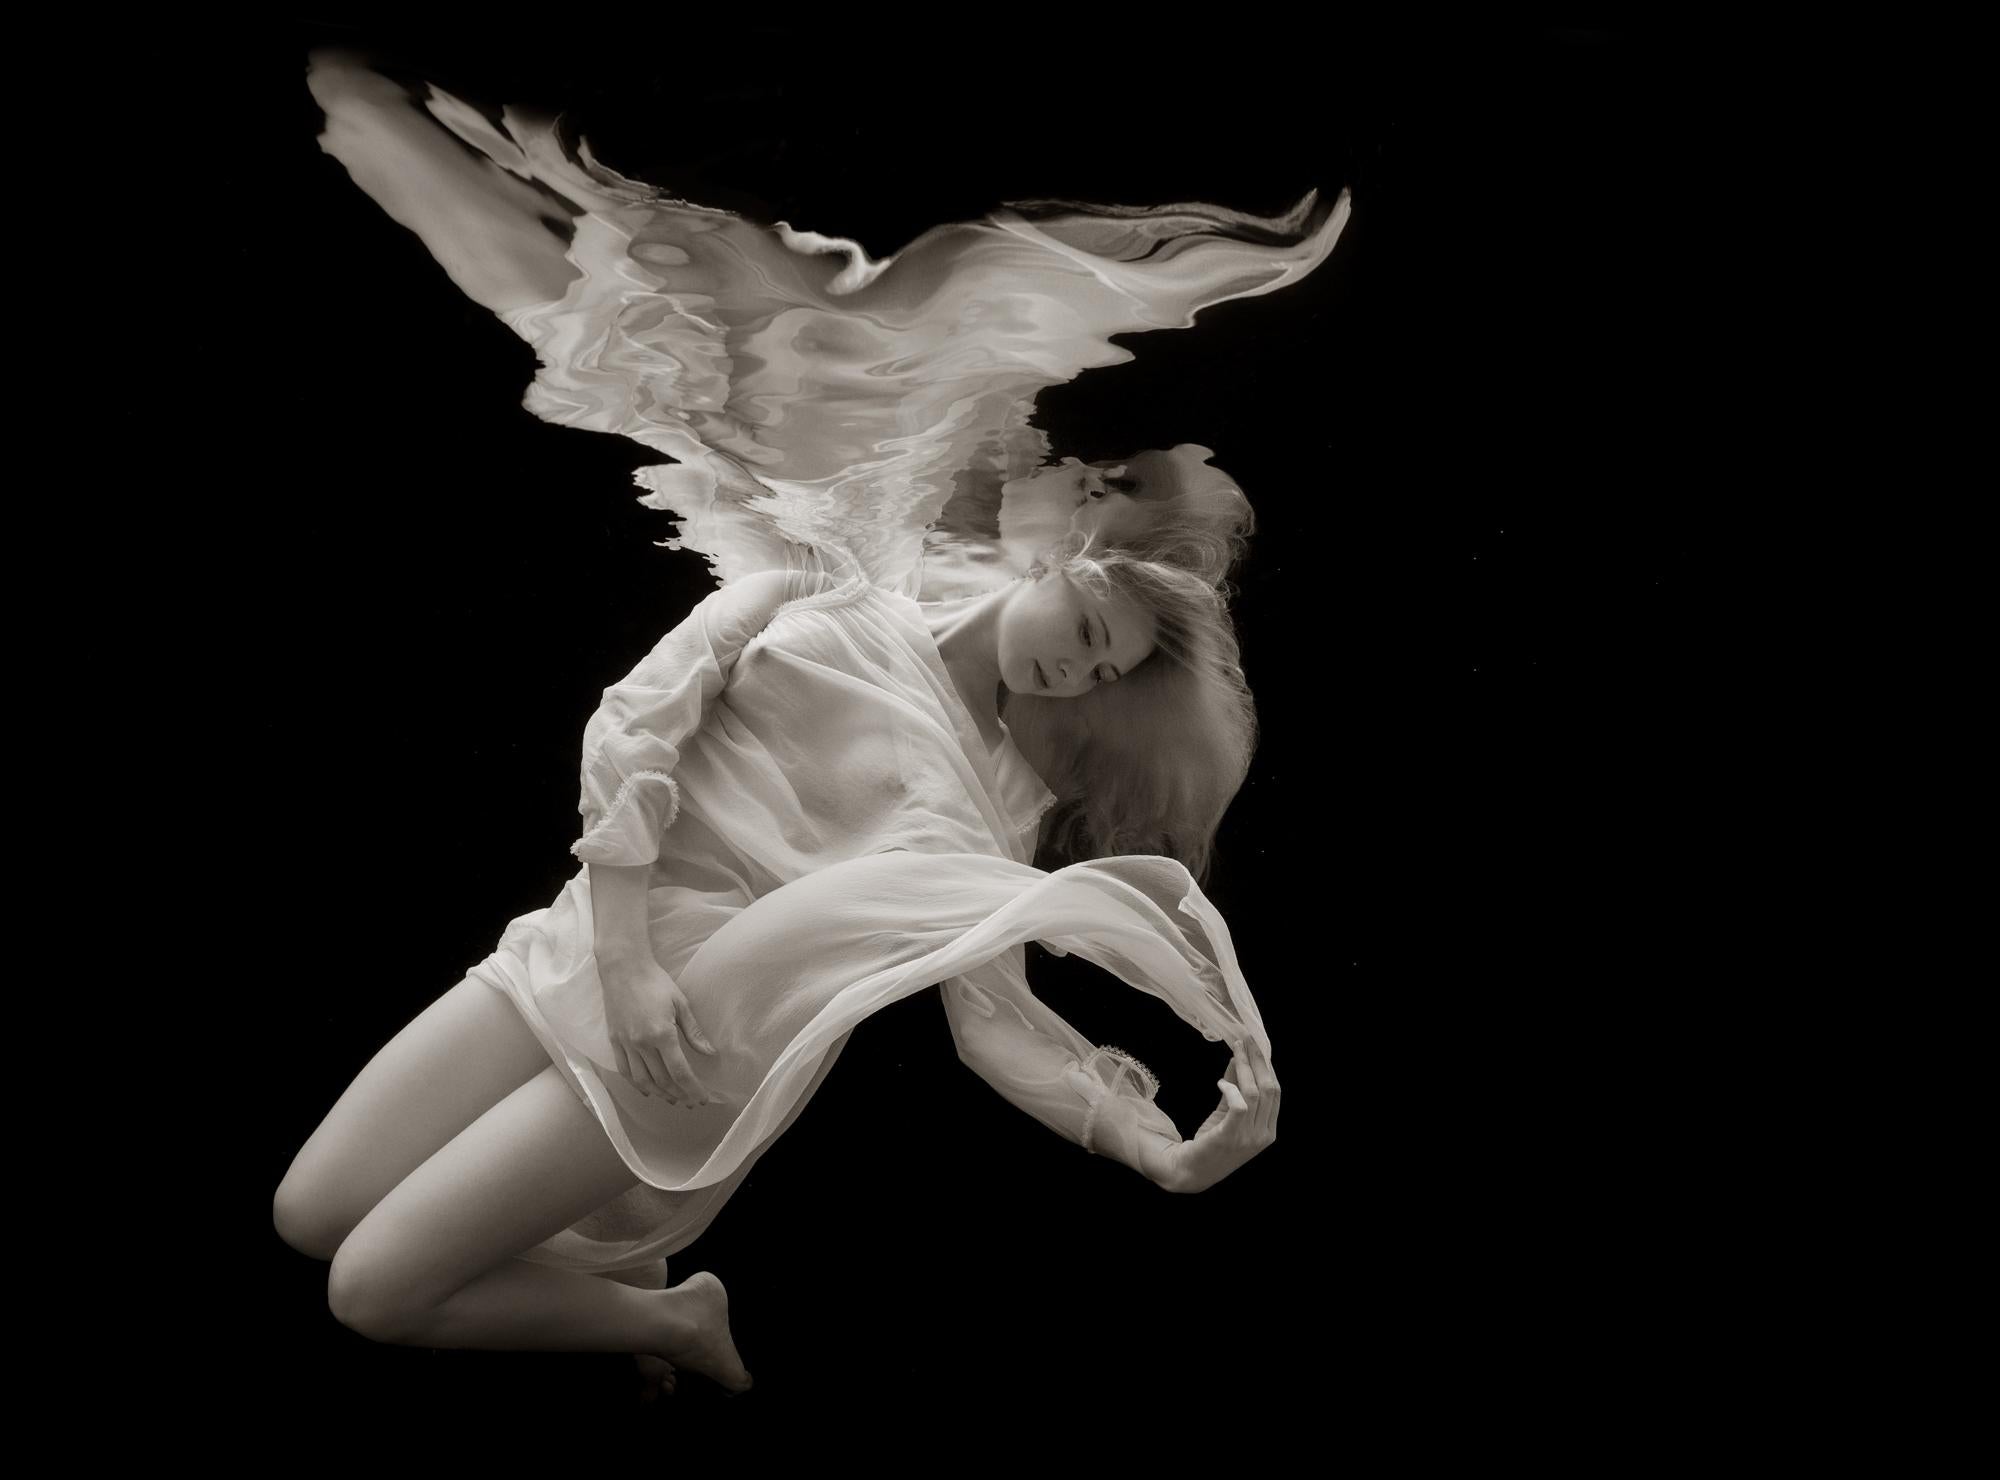 Mermaid Angel - underwater photograph - print on paper 26" x 35" 